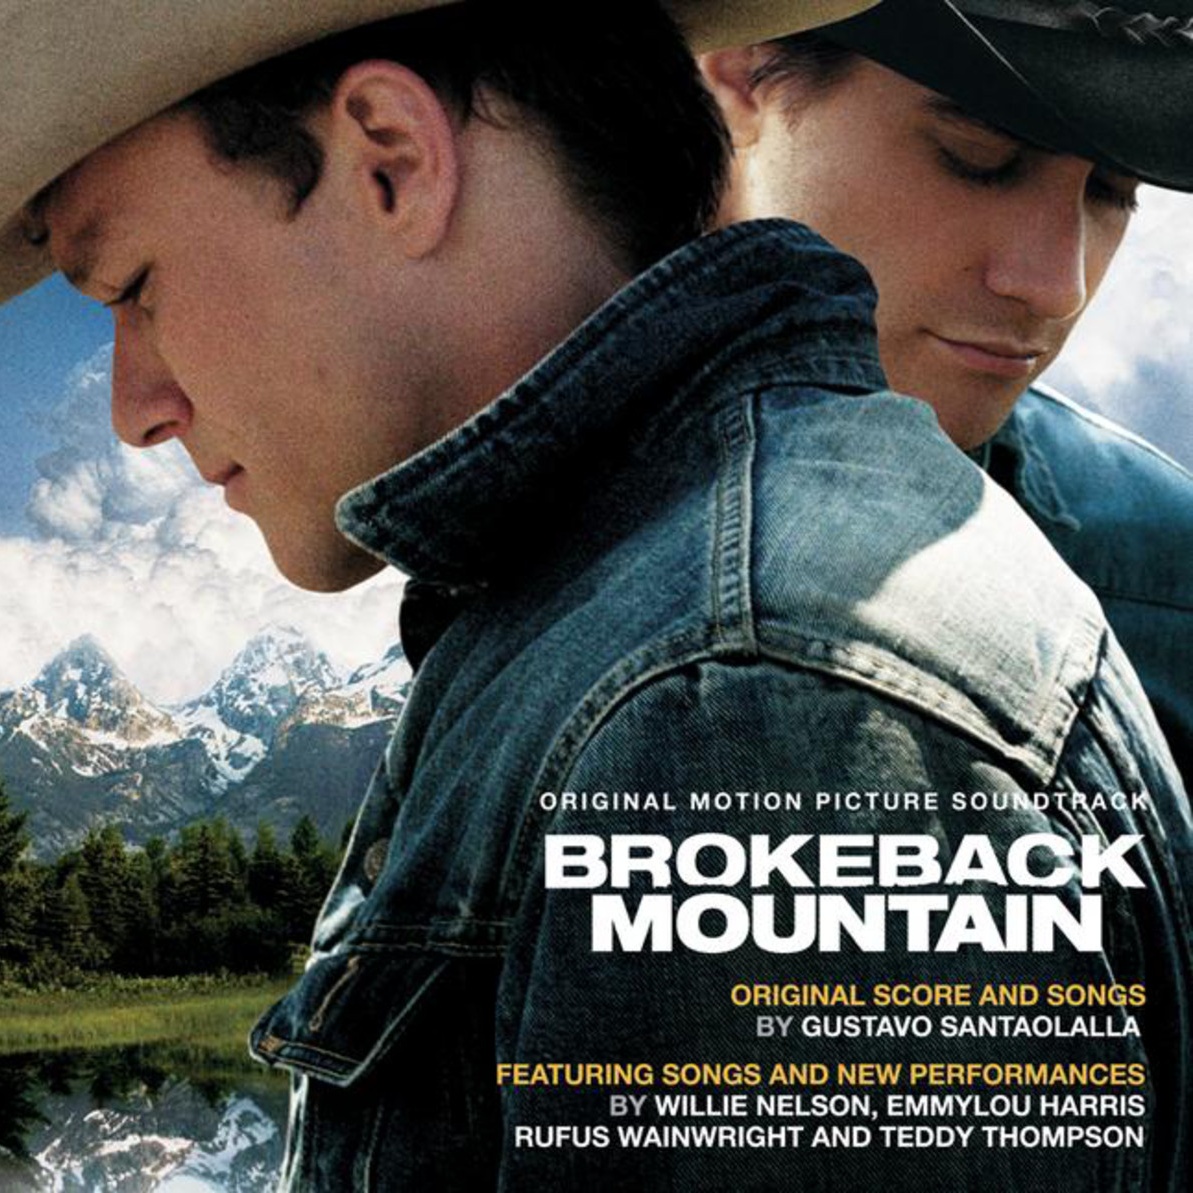 The Maker Makes - Brokeback Mountain/Soundtrack Version